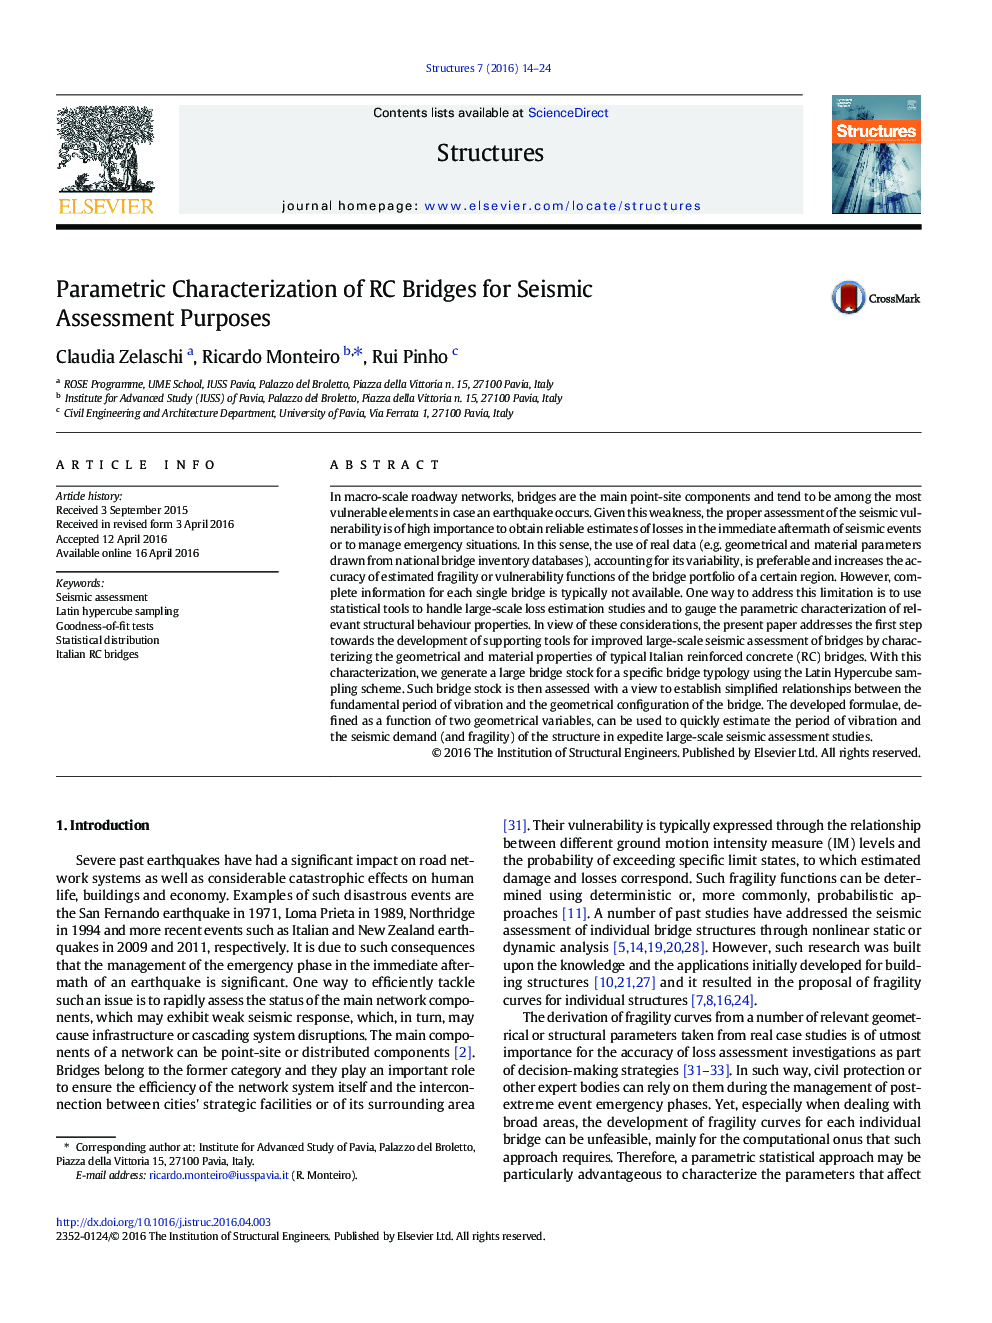 Parametric Characterization of RC Bridges for Seismic Assessment Purposes